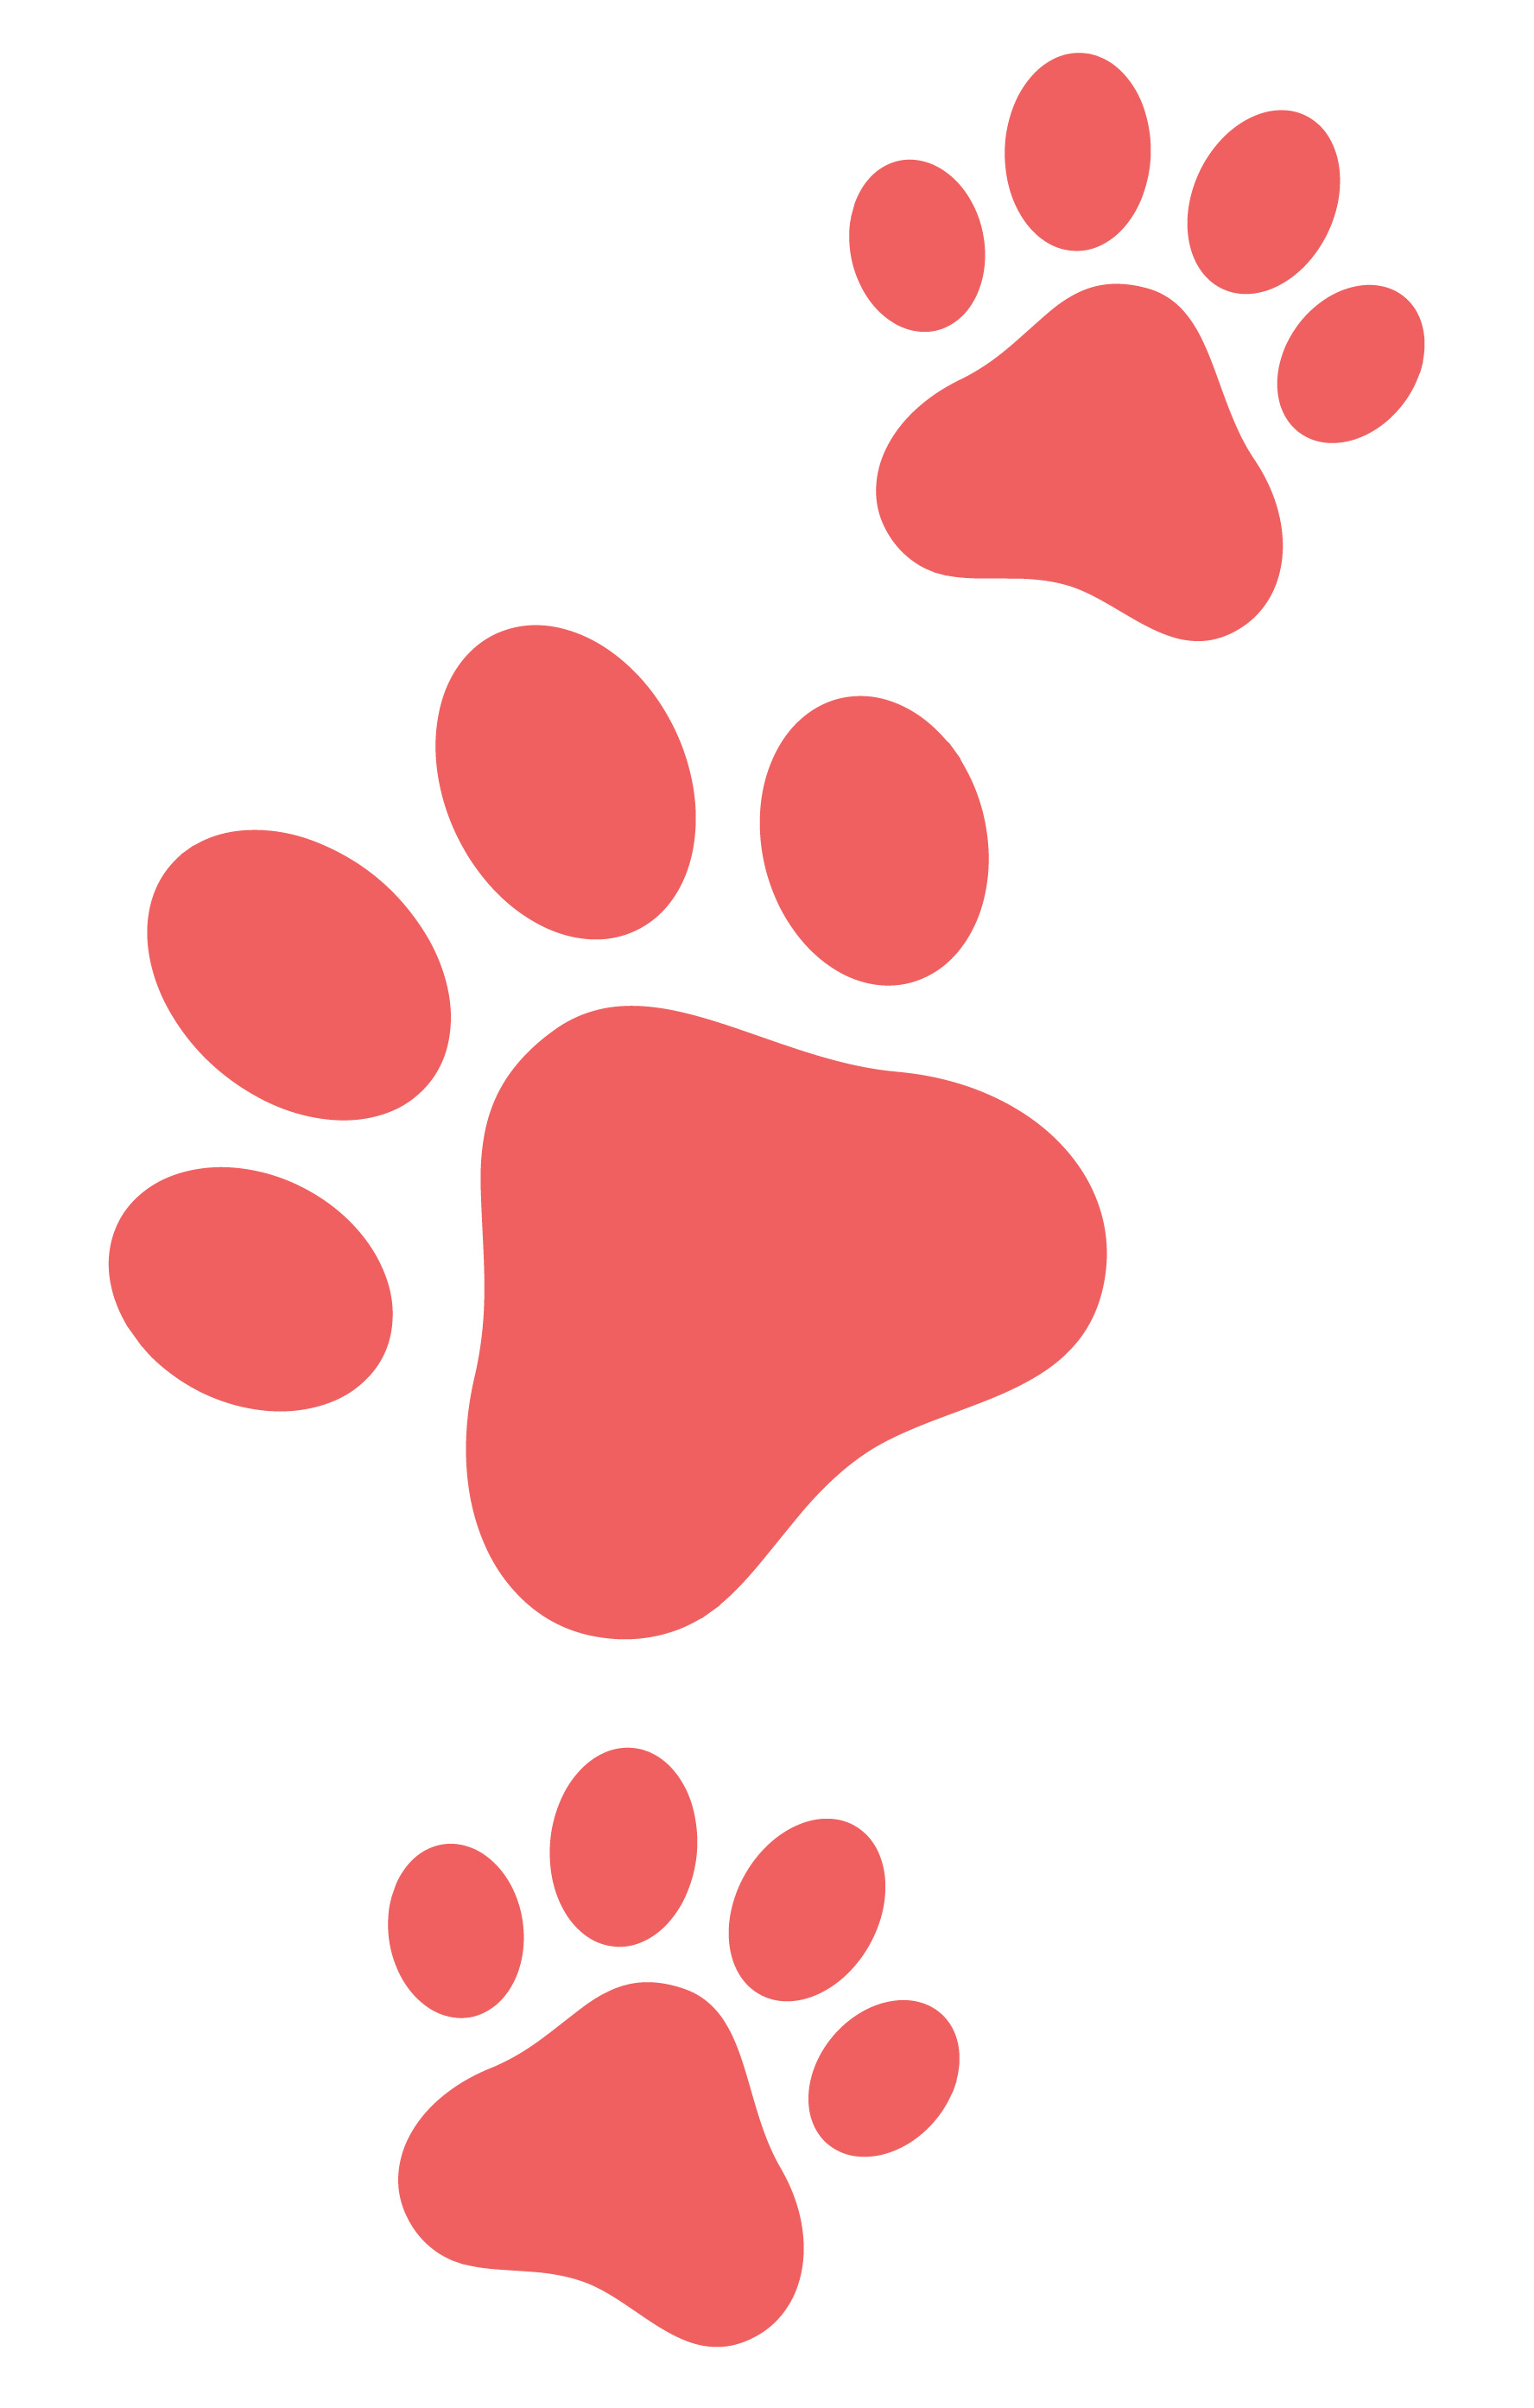 Three red paw prints